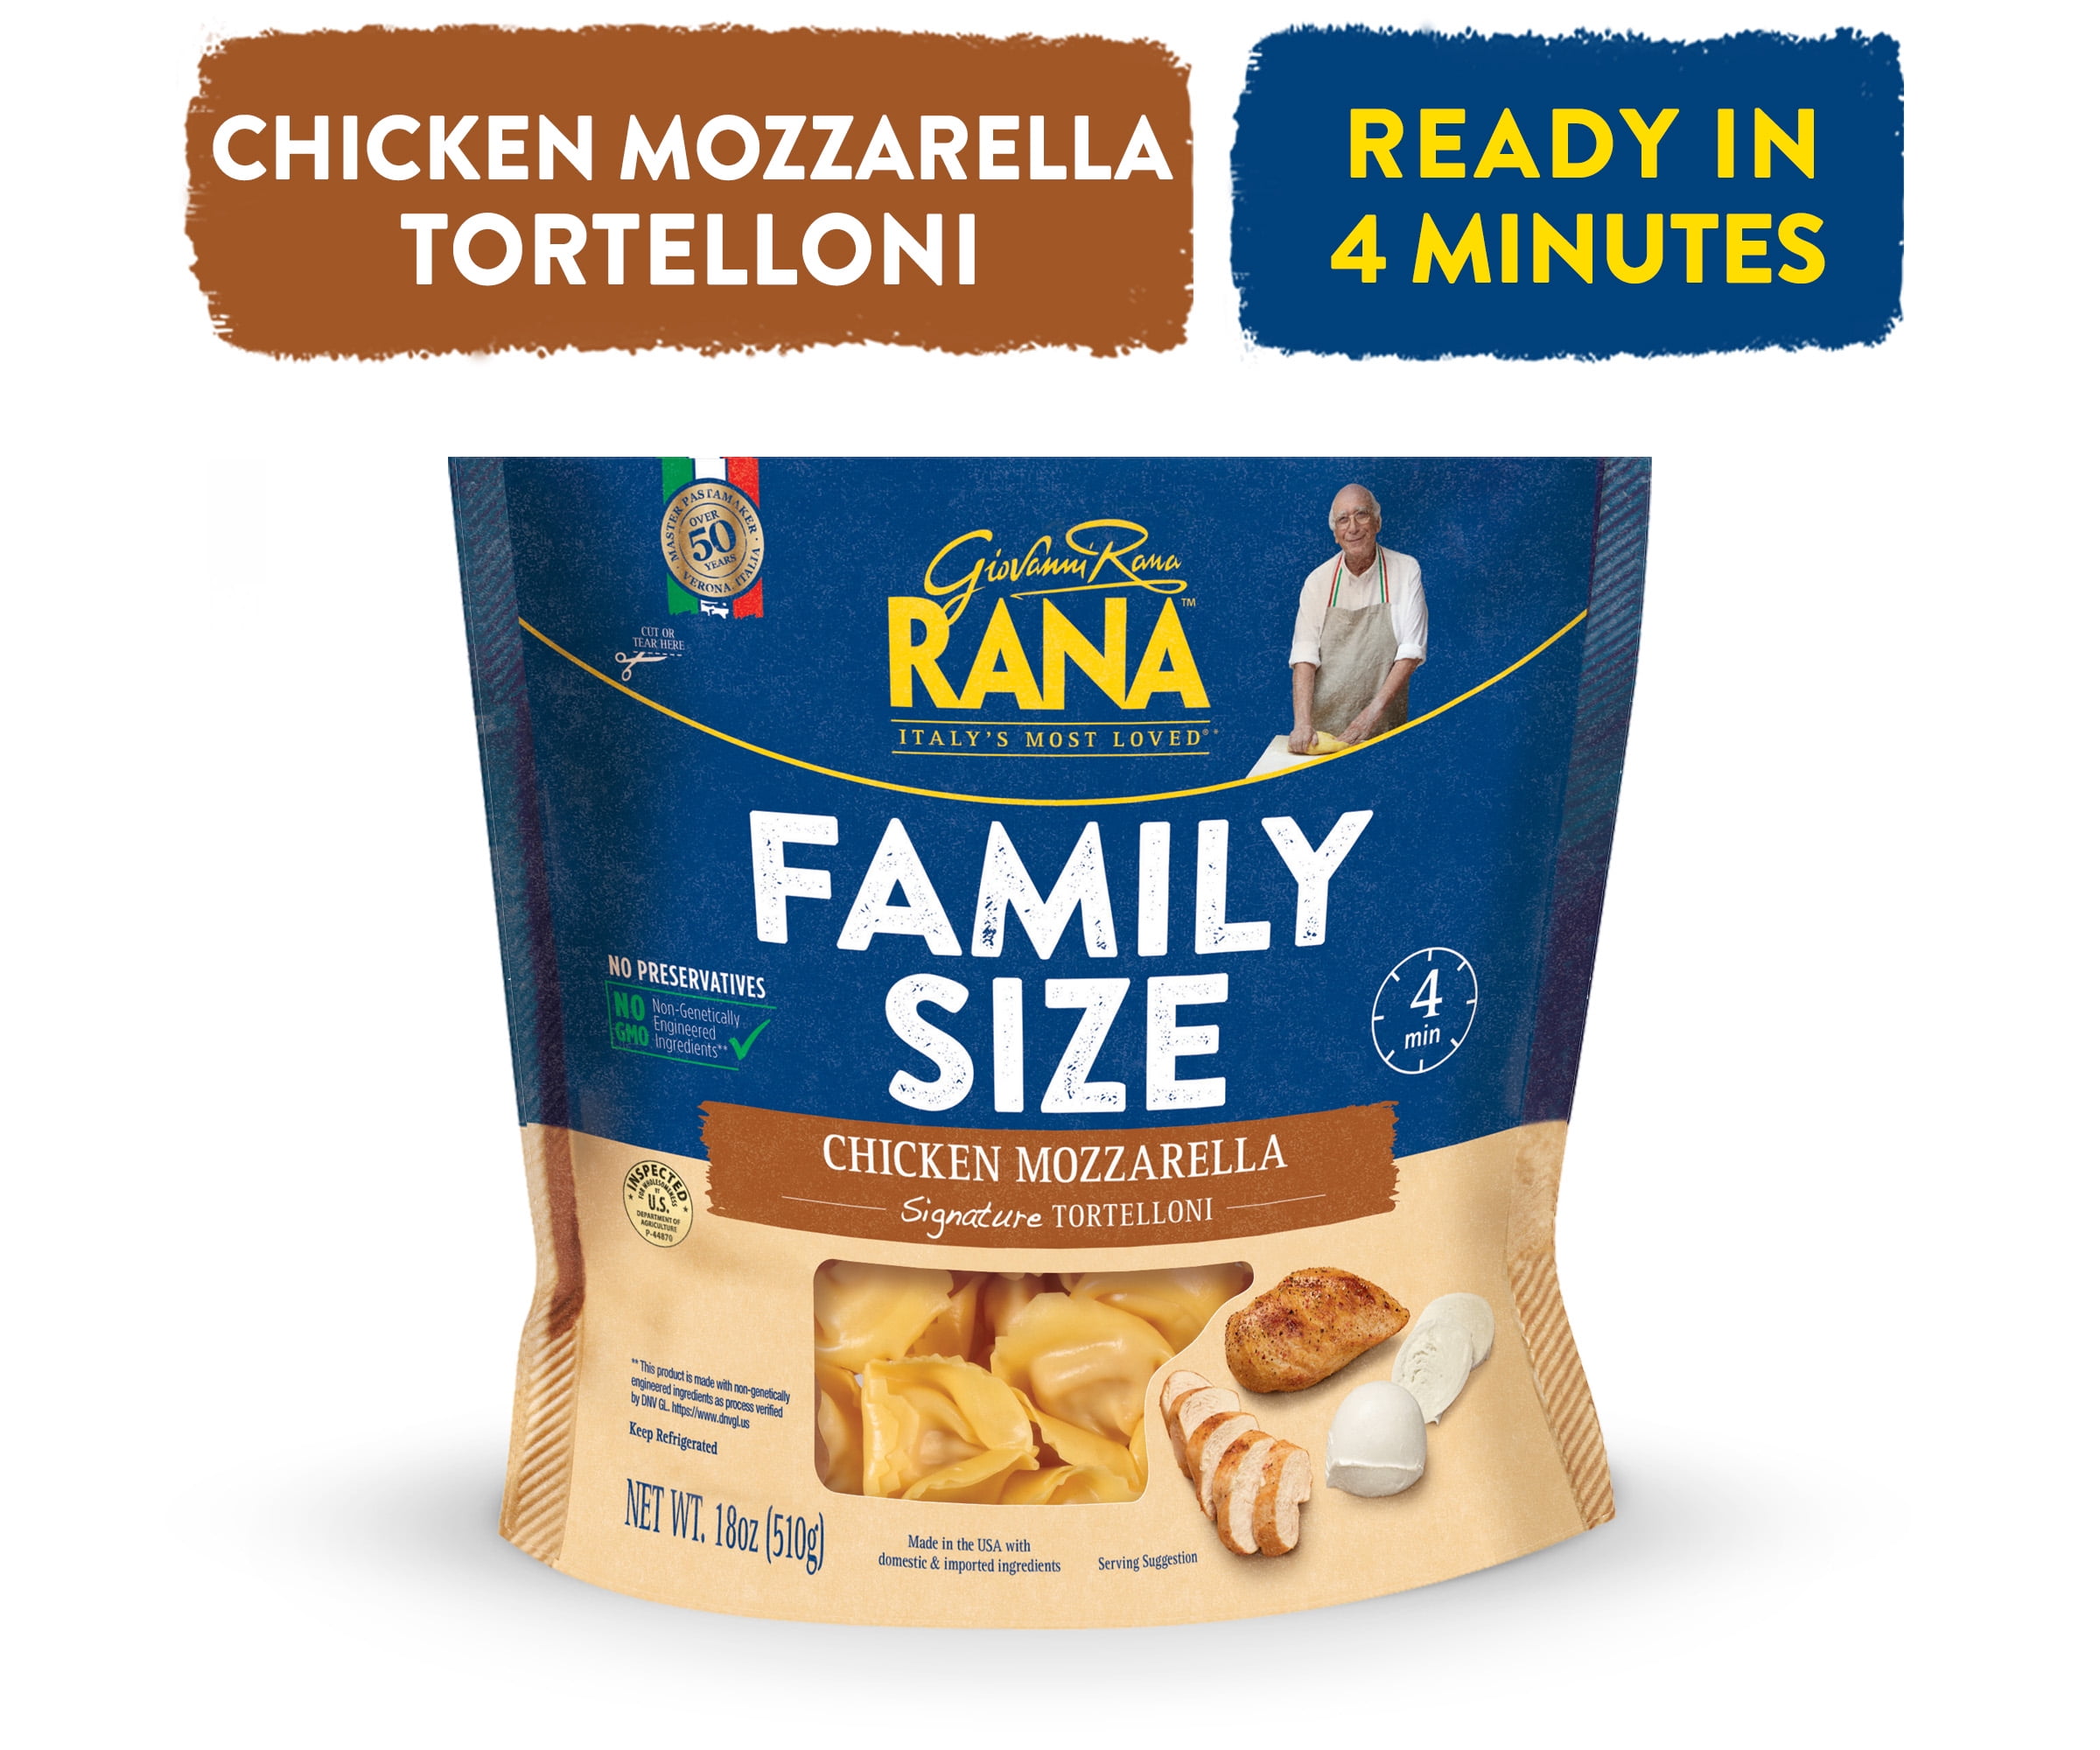 Giovanni Rana Homestyle Tortelloni Chicken Mozzarella Cheese Premium Filled Italian Pasta Bag (Family Size, 19oz)